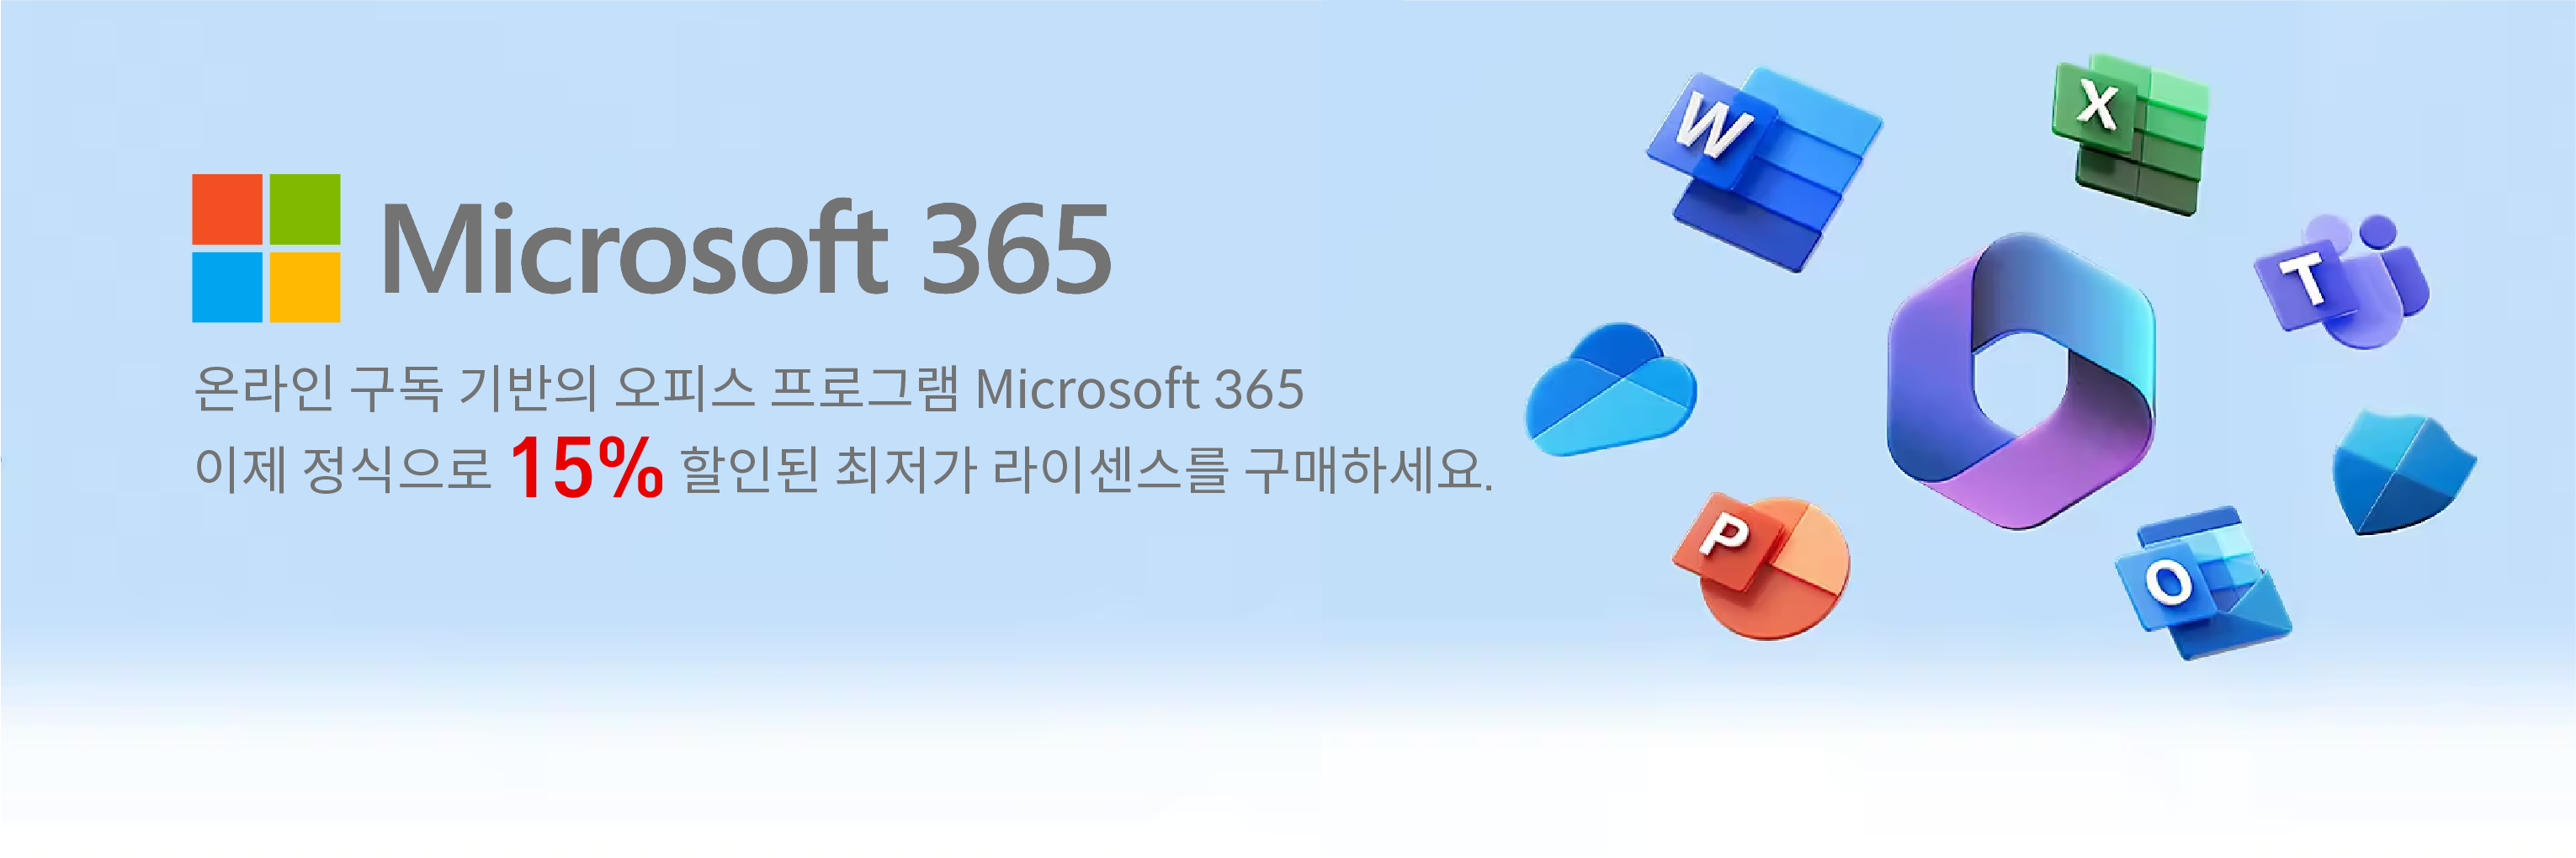 Microsoft365 